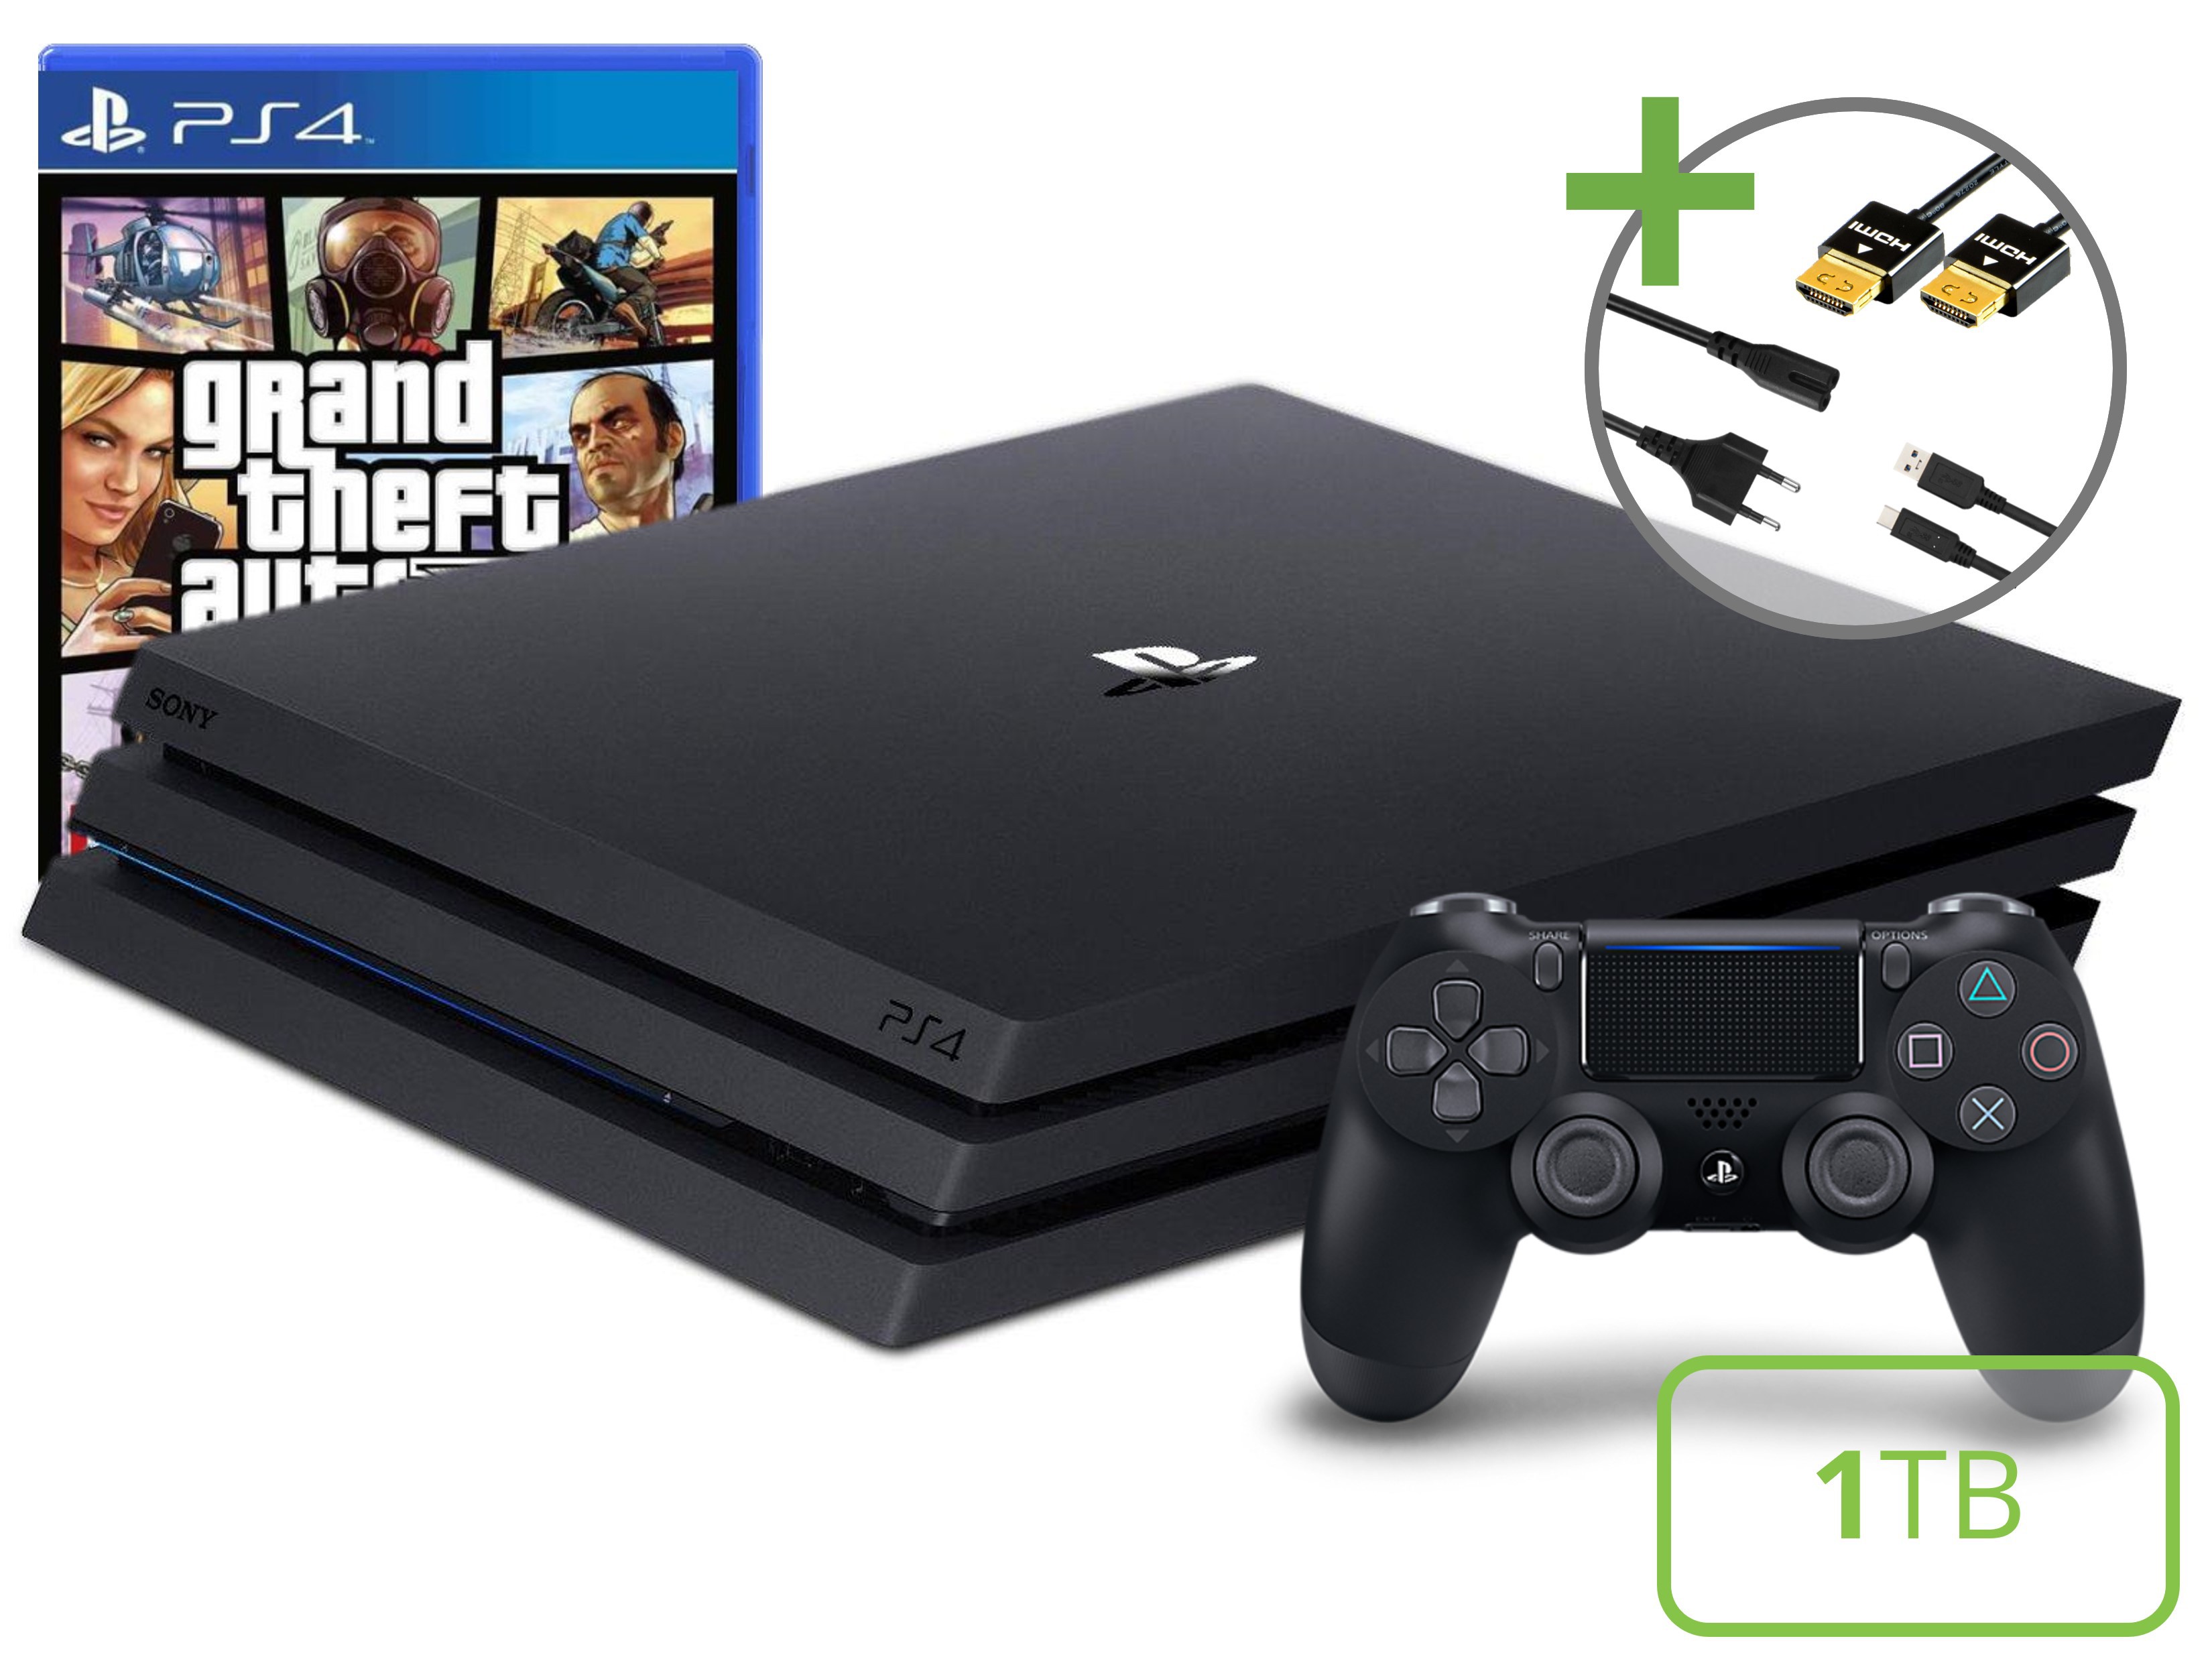 Sony PlayStation 4 Pro Starter Pack - 1TB Grand Theft Auto V Edition Kopen | Playstation 4 Hardware